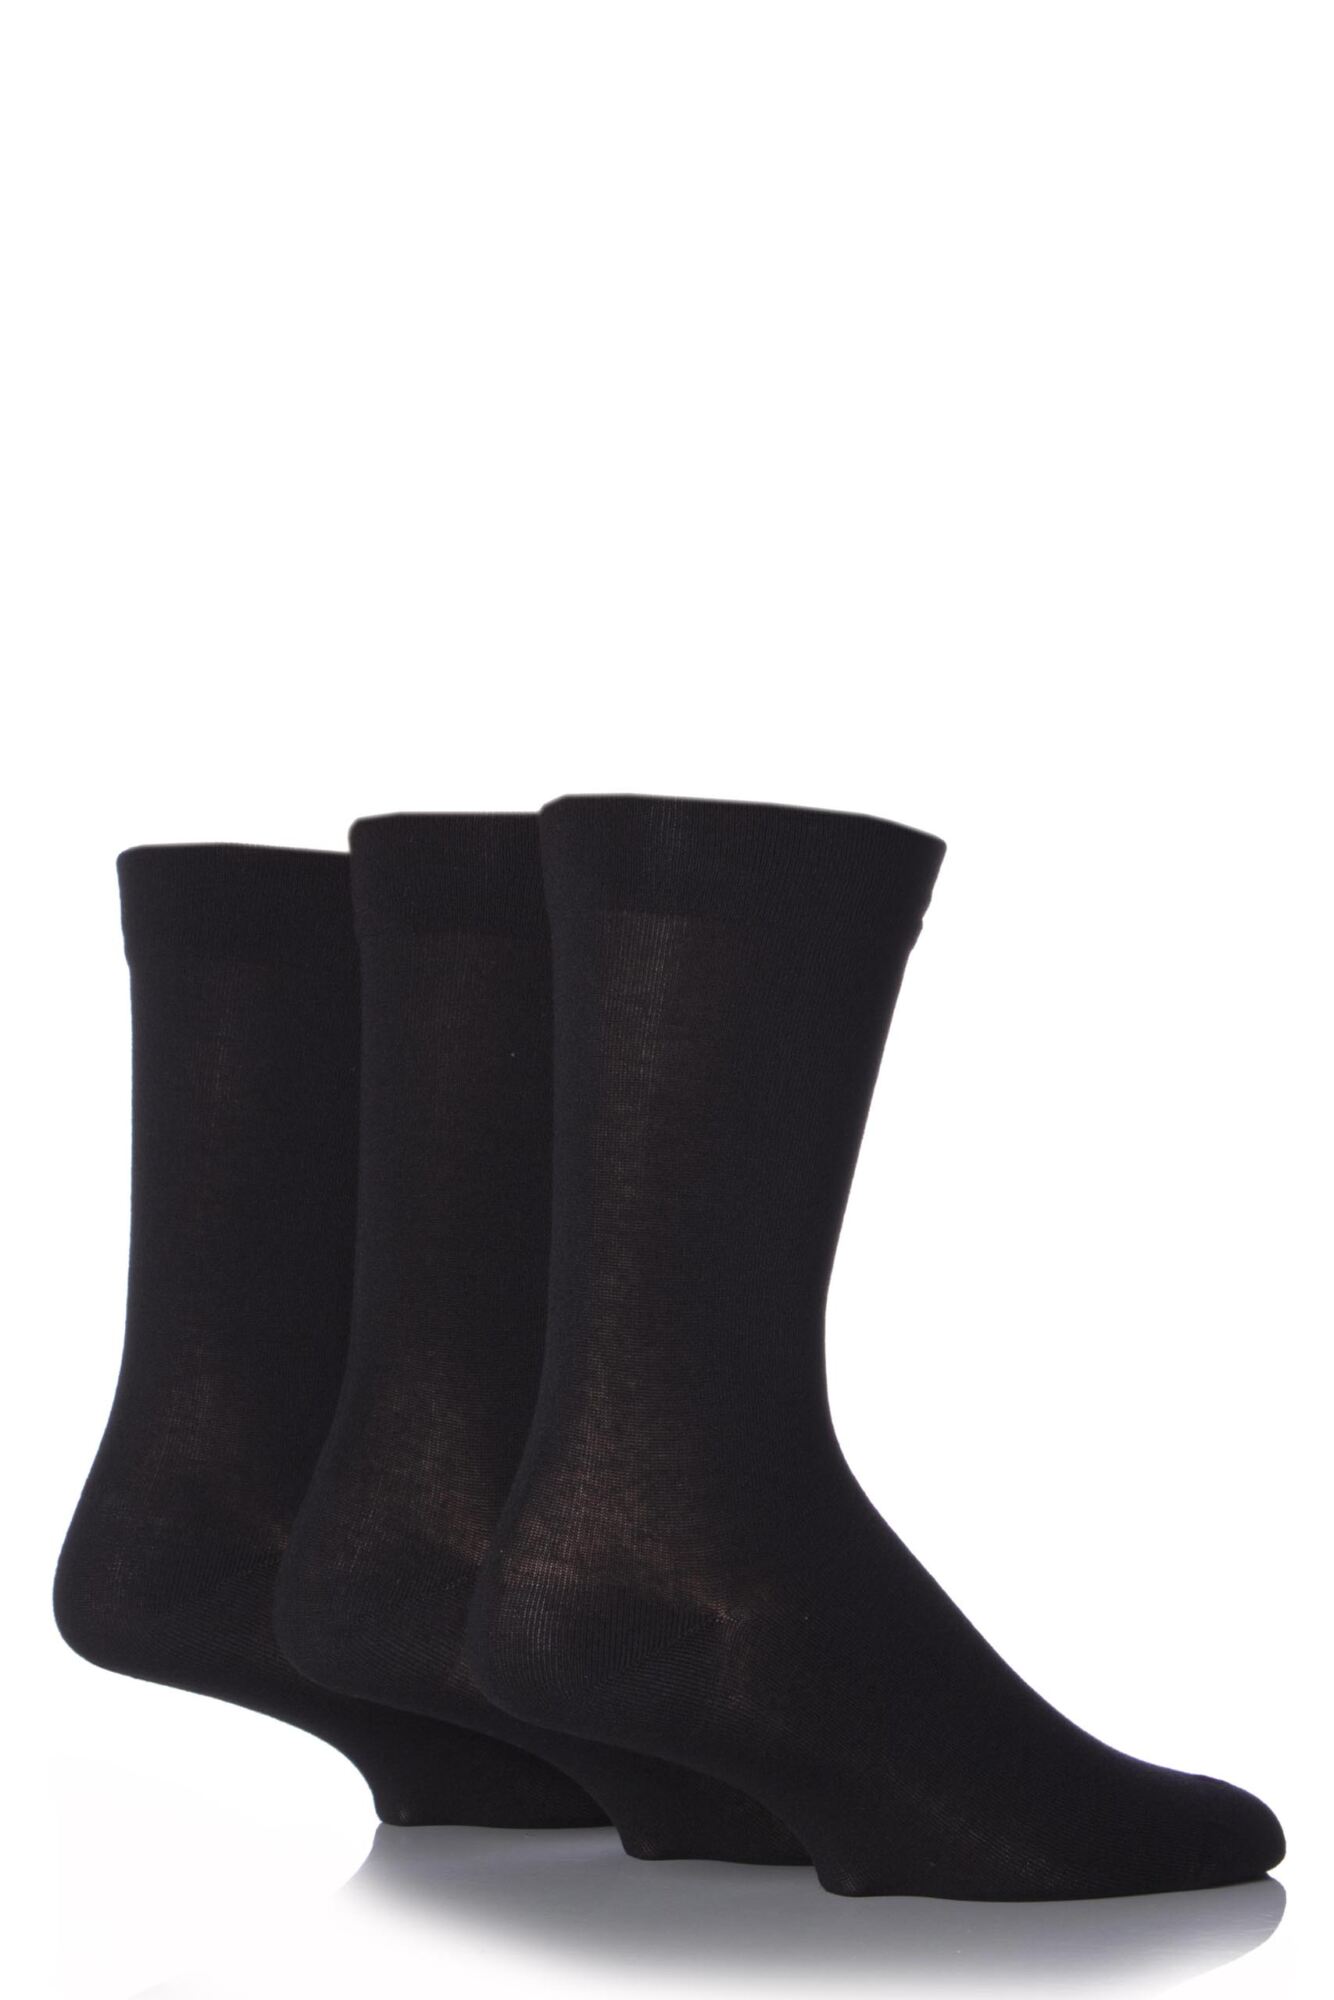 3 Pair Comfort Cuff Plain Gentle Bamboo Socks with Smooth Toe Seams Men's - SOCKSHOP